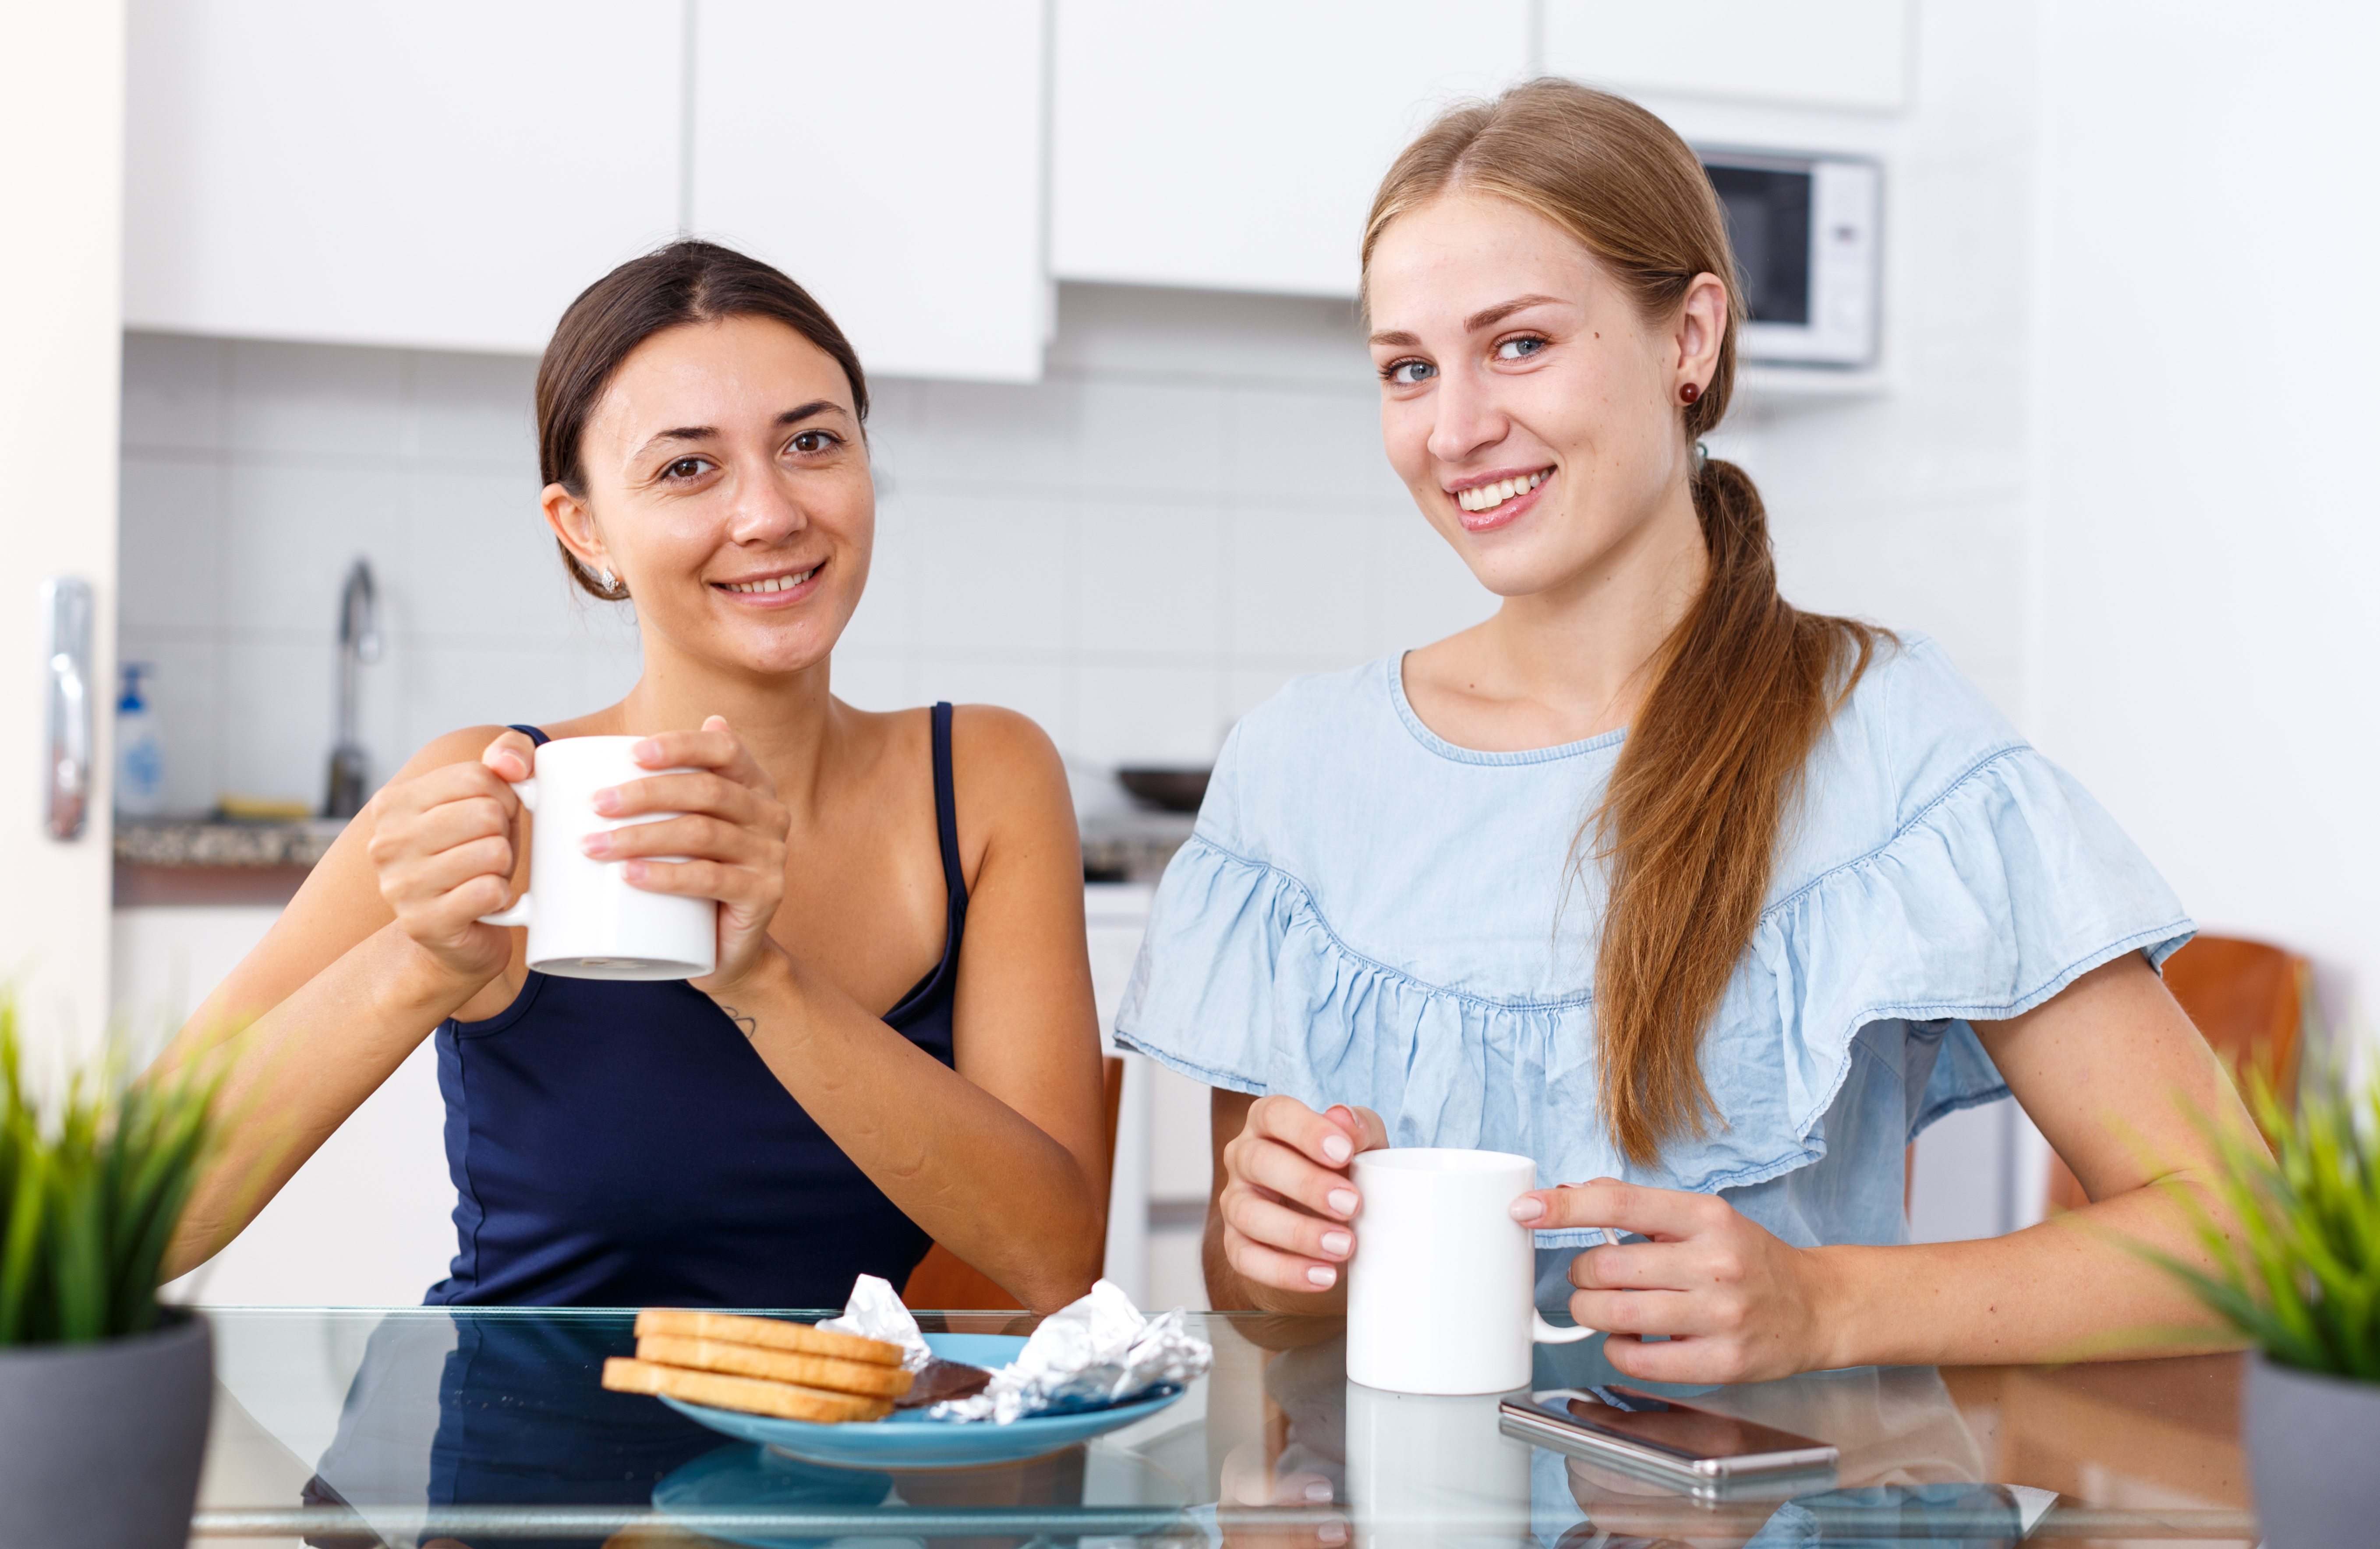 Two women enjoying a hot drink | Source: Shutterstock